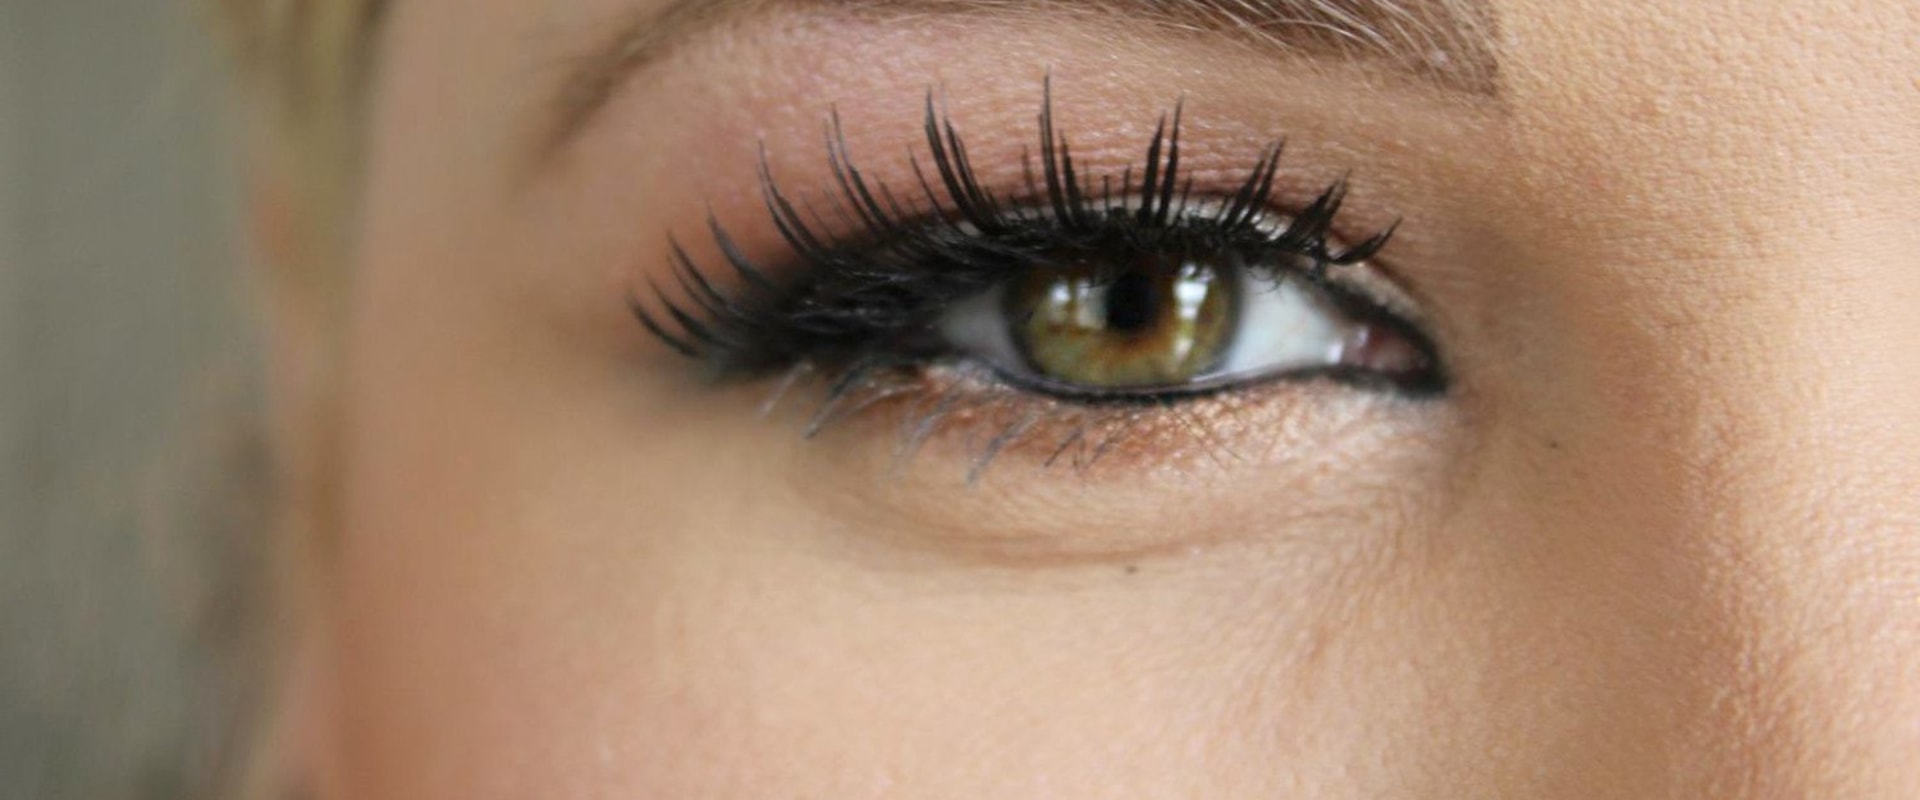 What lash style makes eyes look bigger?